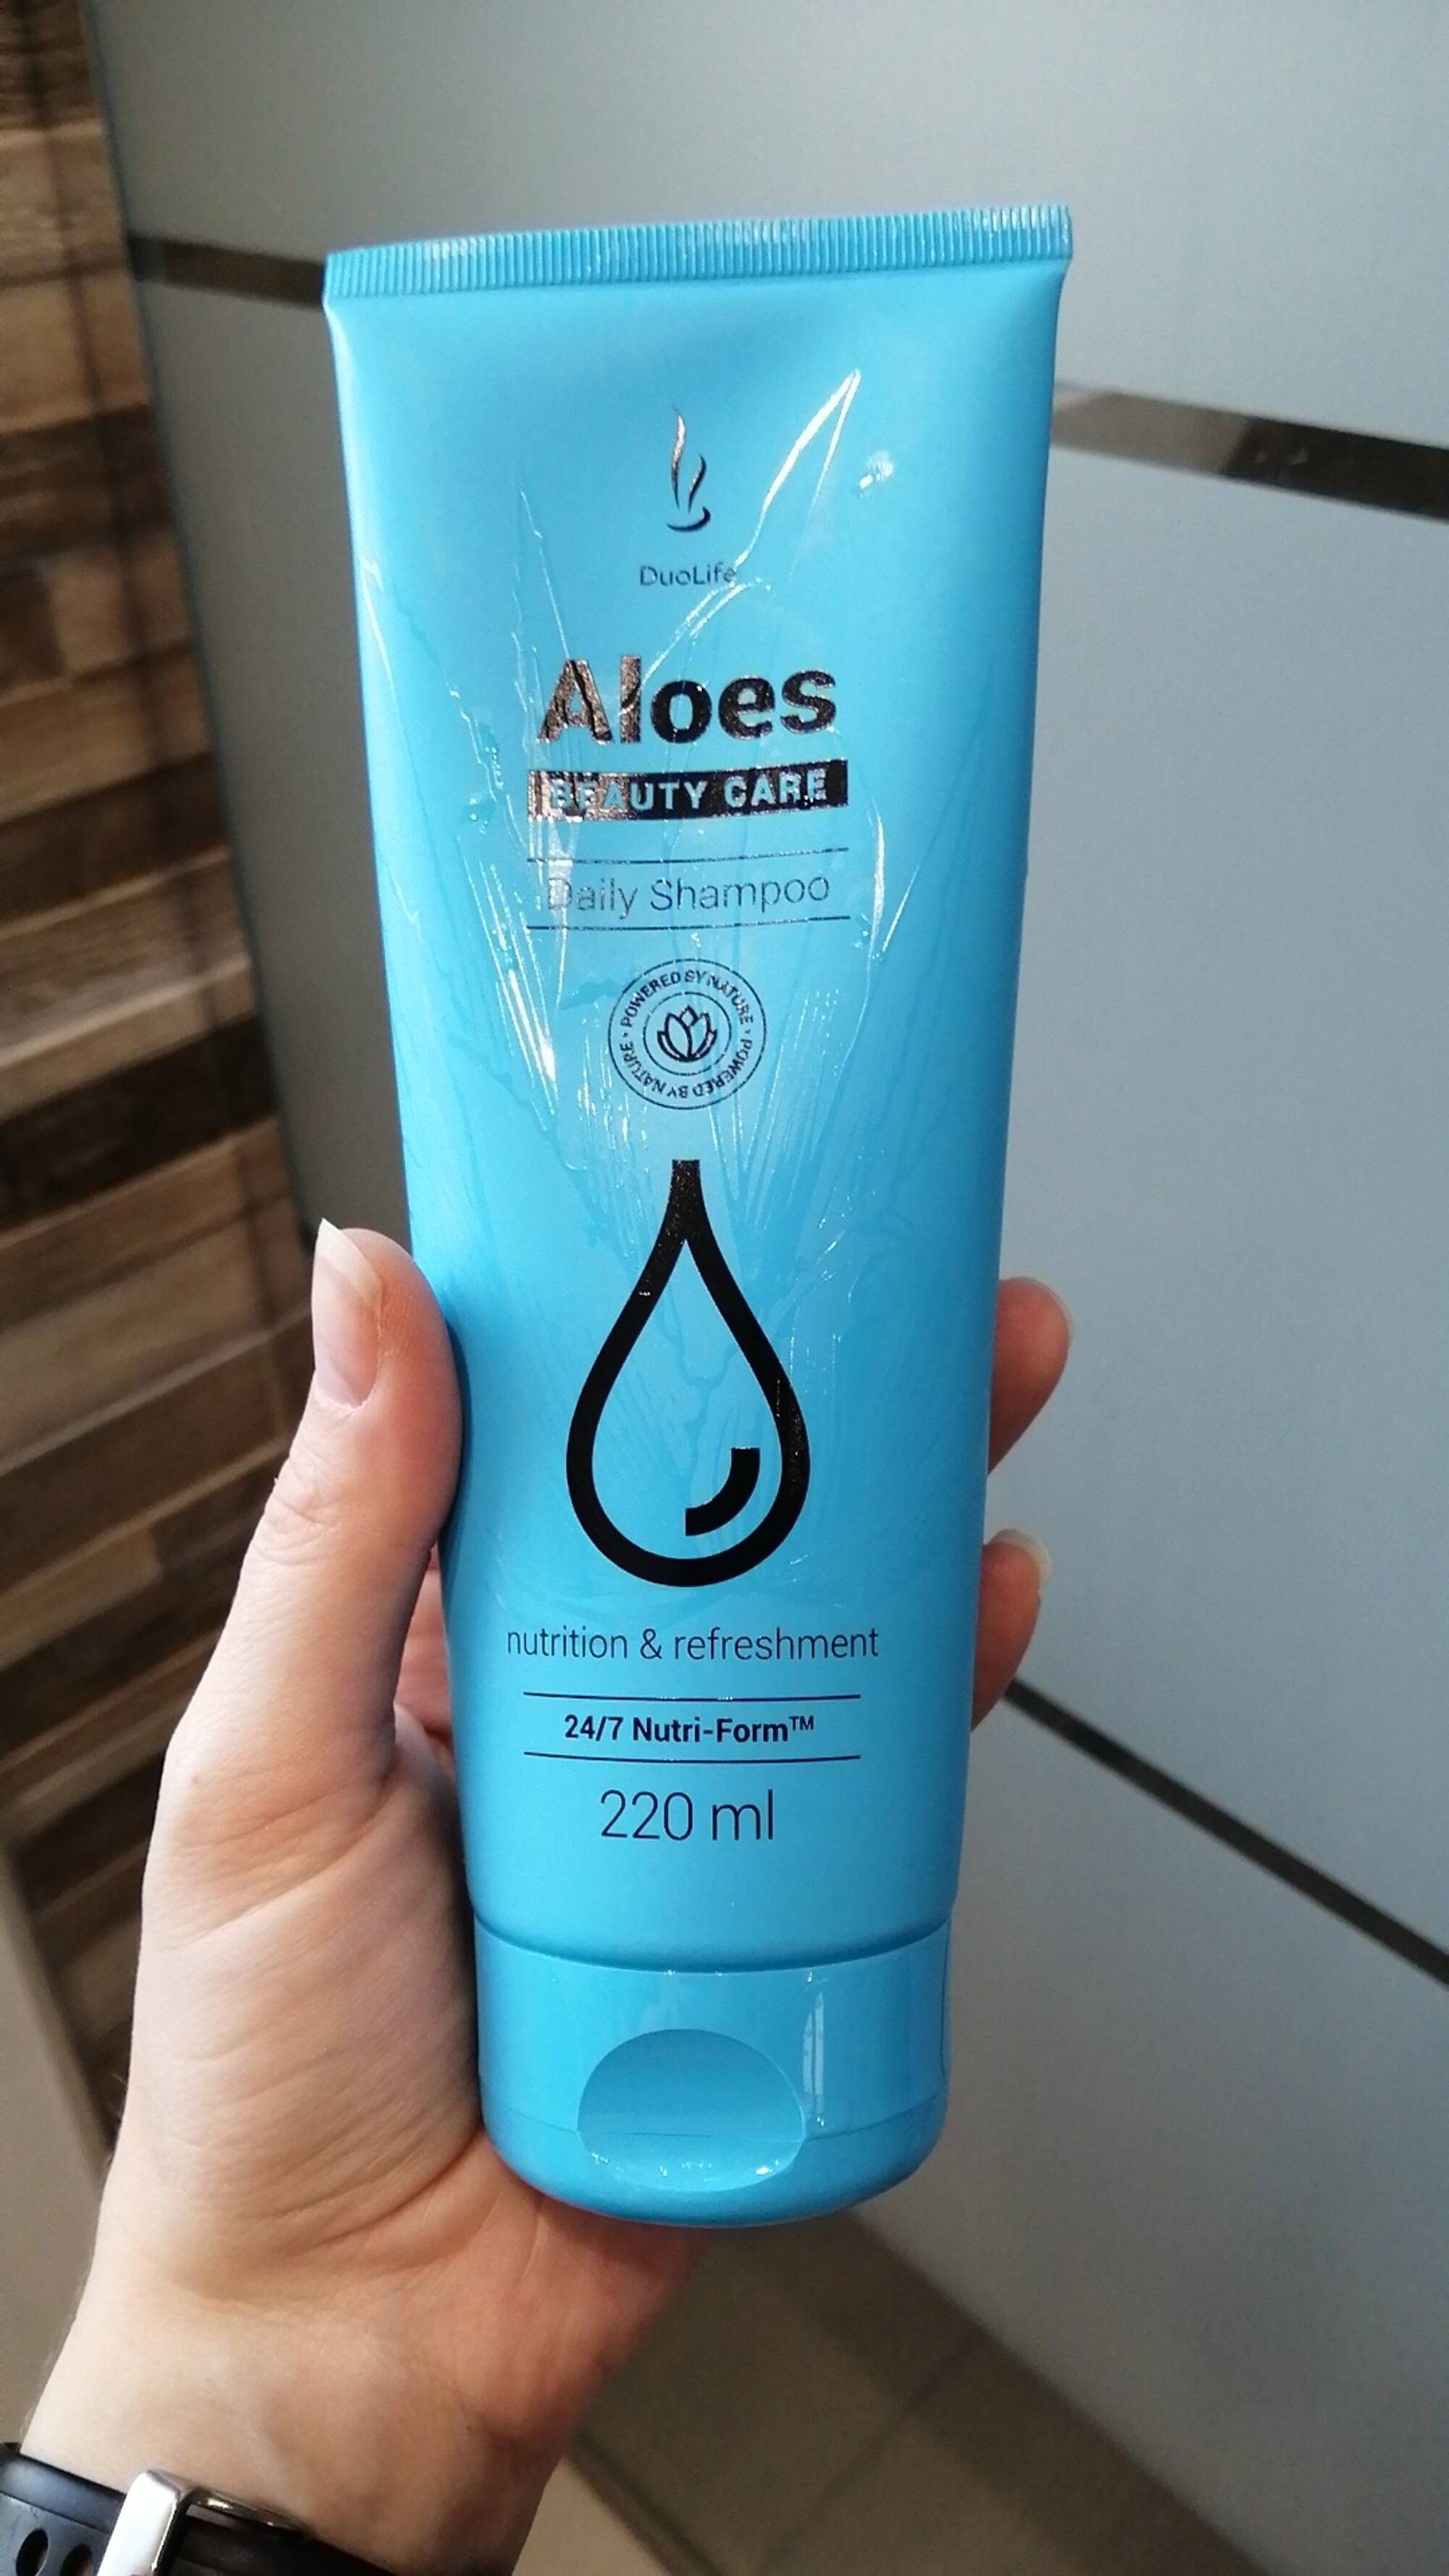 DUOLIFE - Aloes beauty care - Daily shampoo